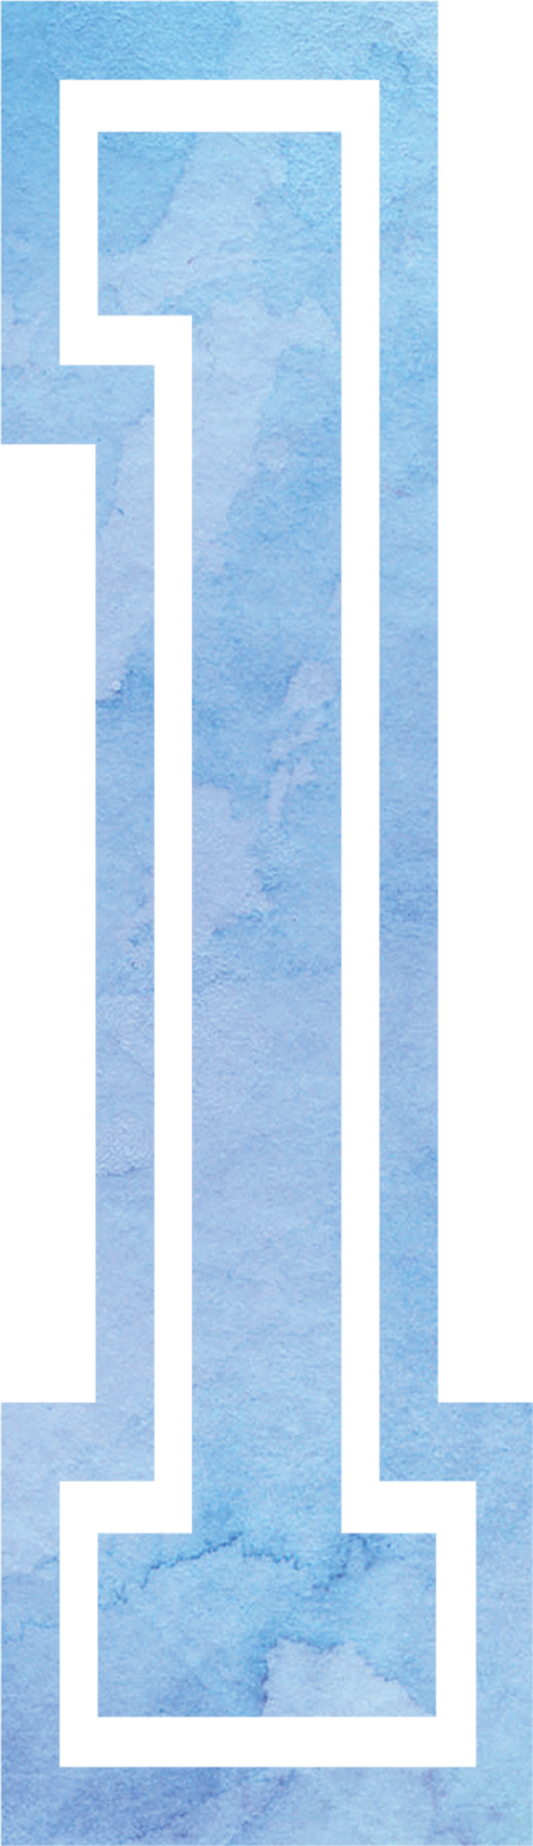 Bügelbild Zahl Aquarell Blau 1